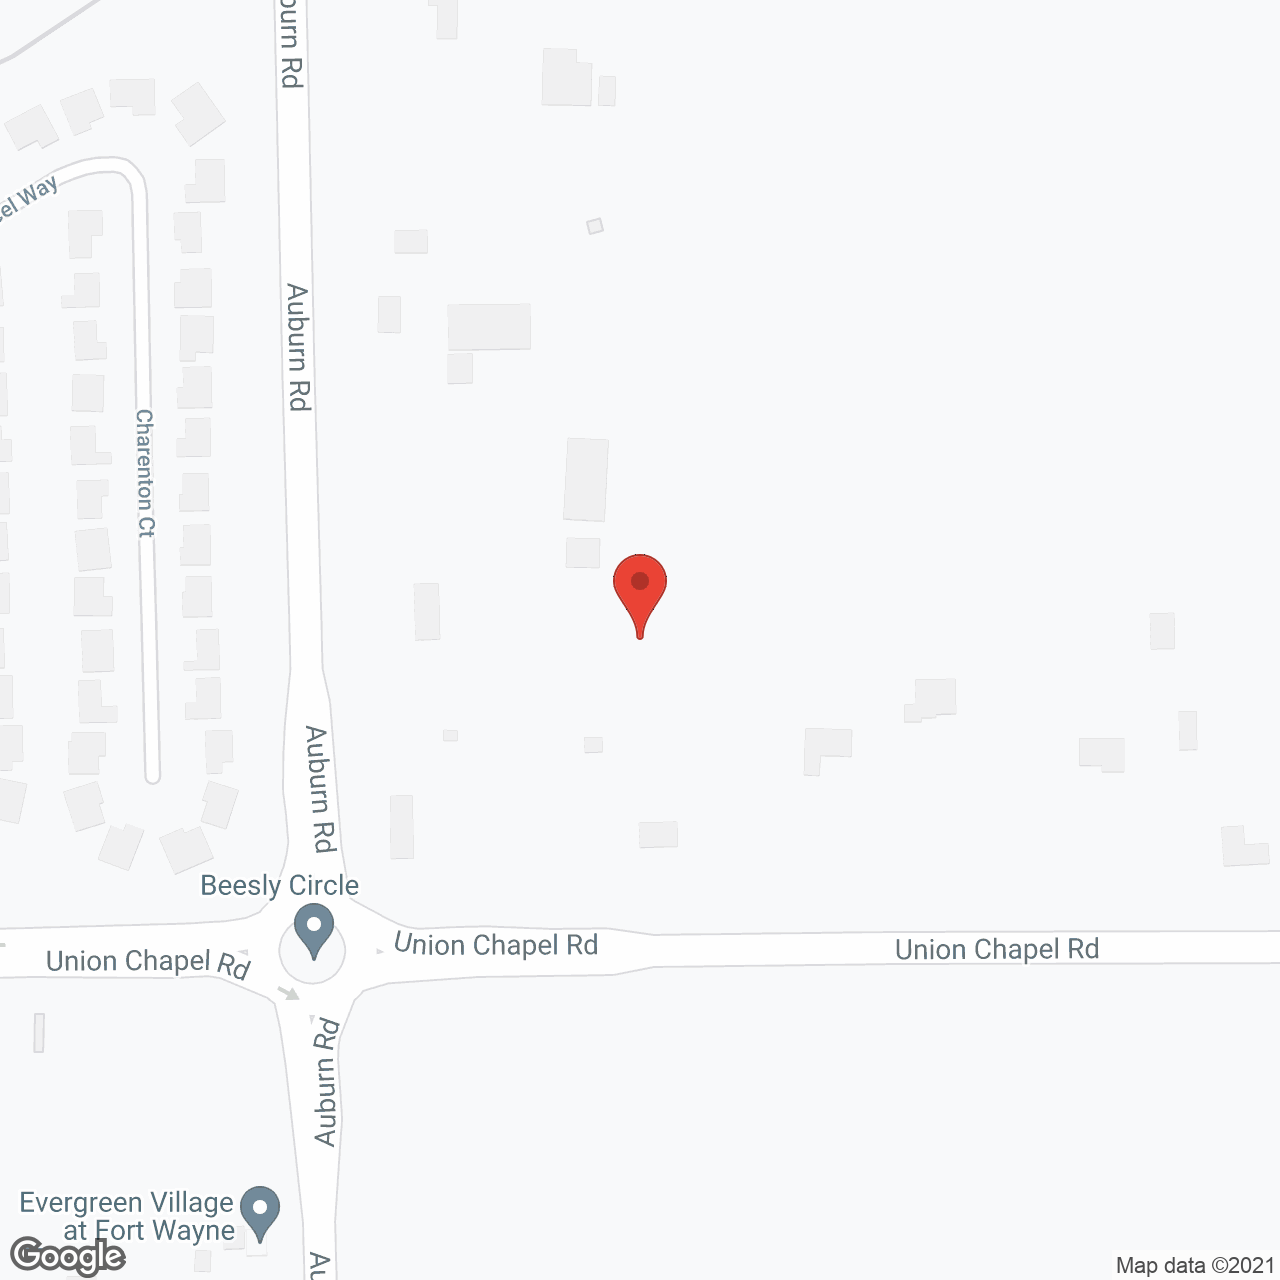 Evergreen Village of Fort Wayne in google map